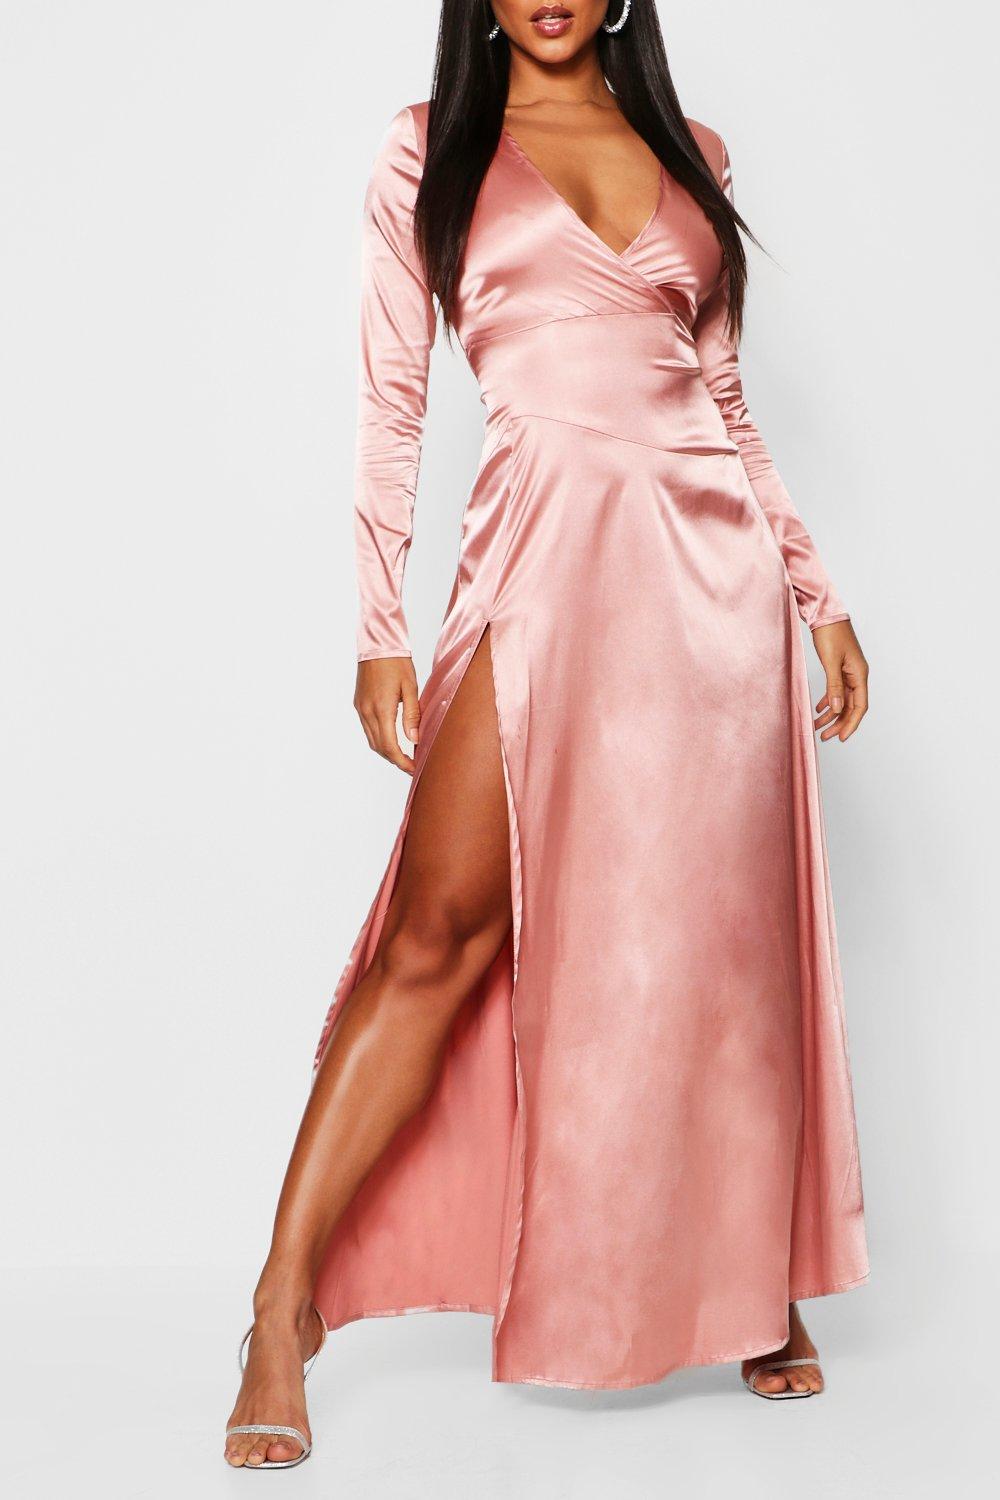 pink satin dress long sleeve